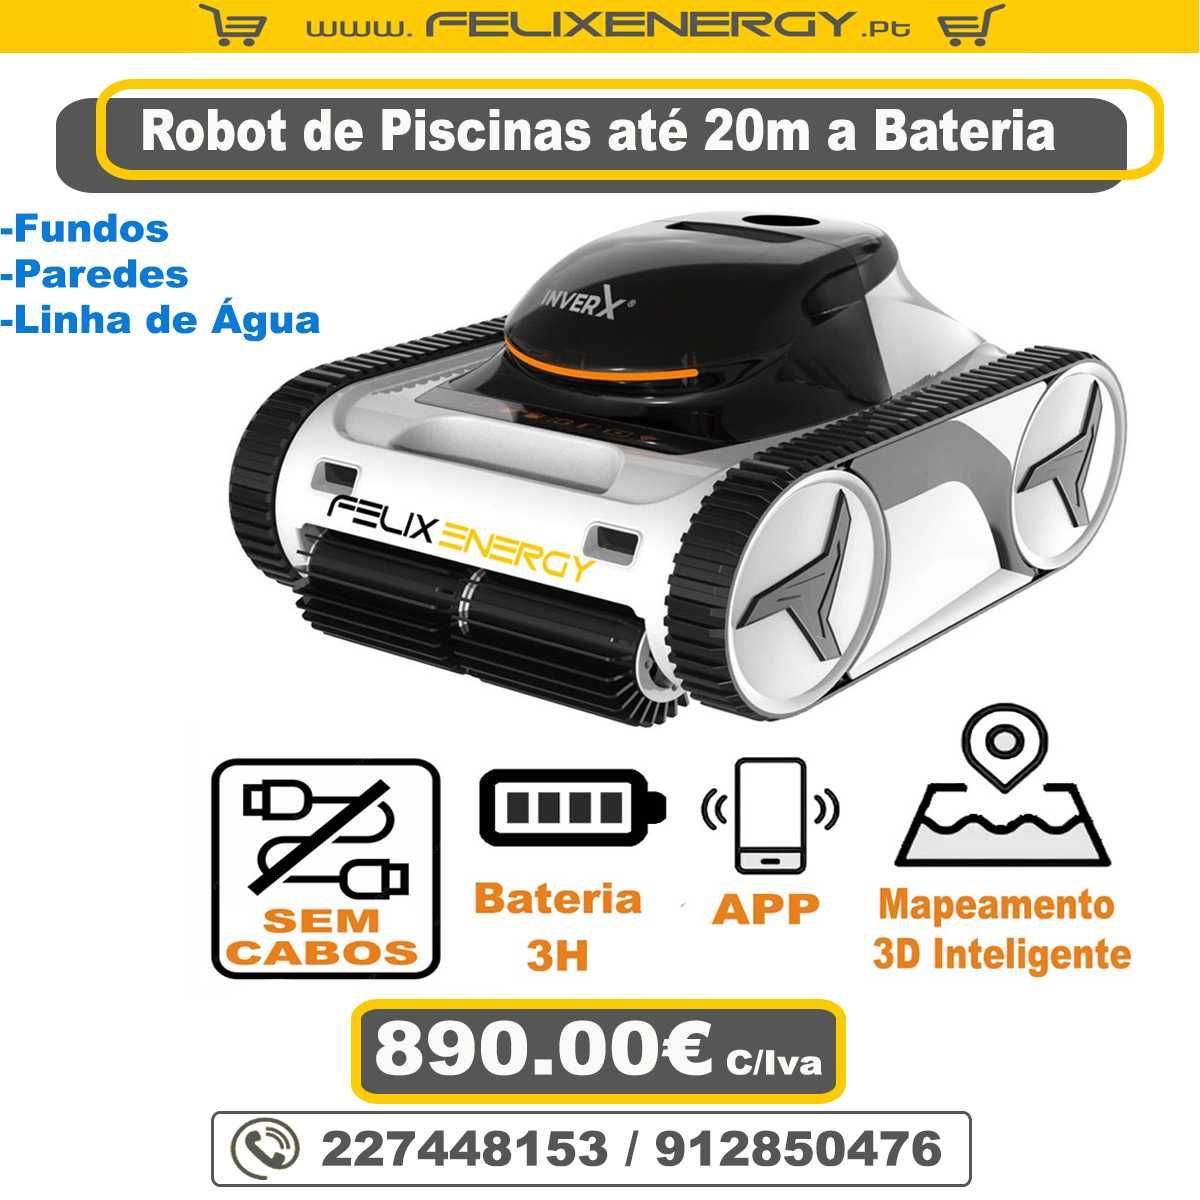 Robot de Piscina Bateria Limpa Fundo, Paredes, Linha de Água X-Warrior